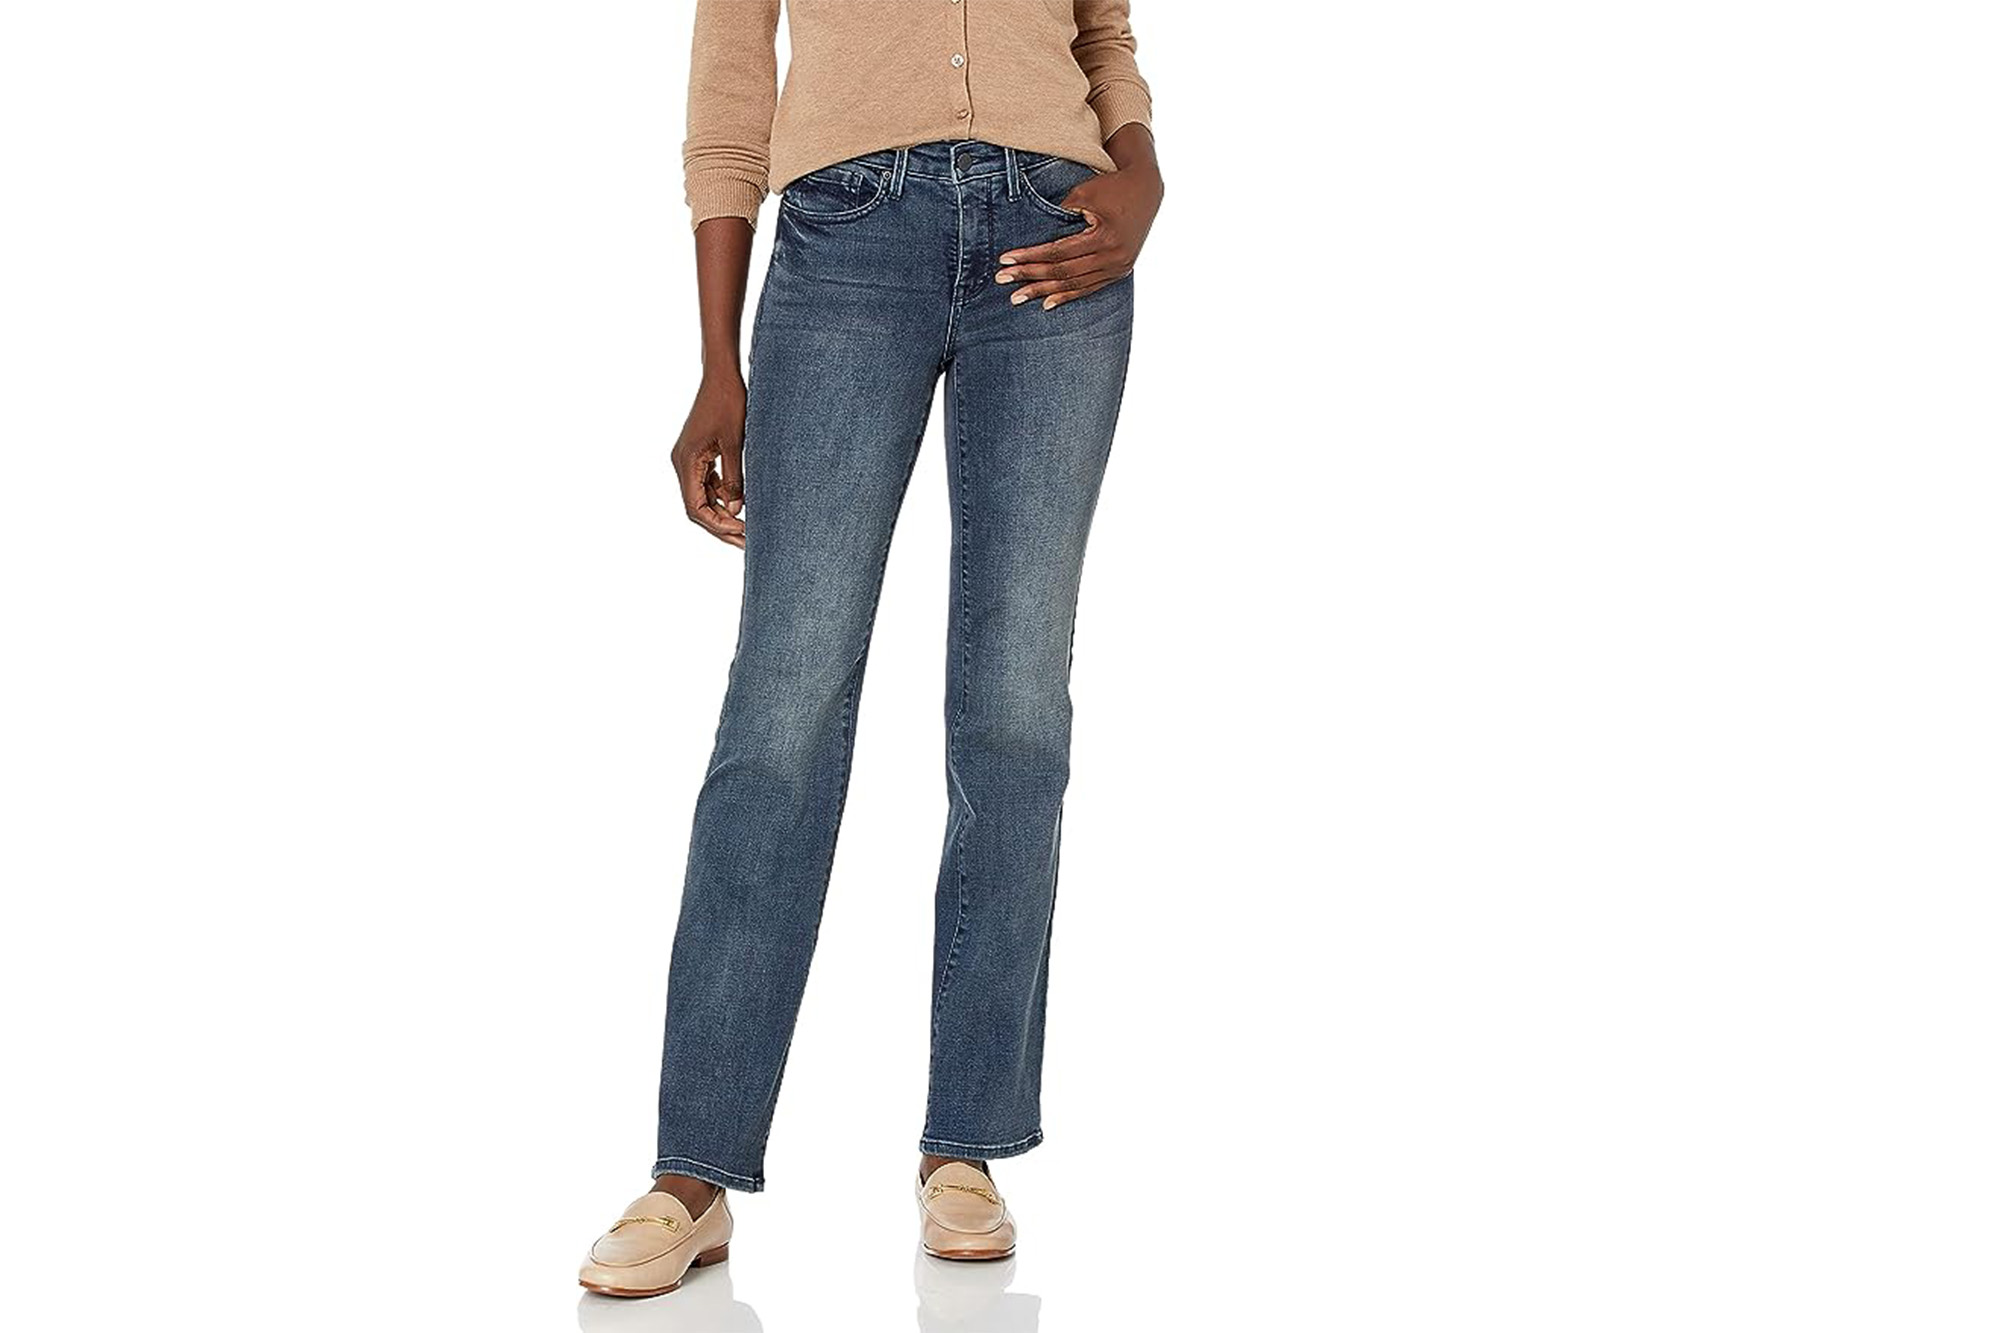 A model in bootcut NYDJ jeans